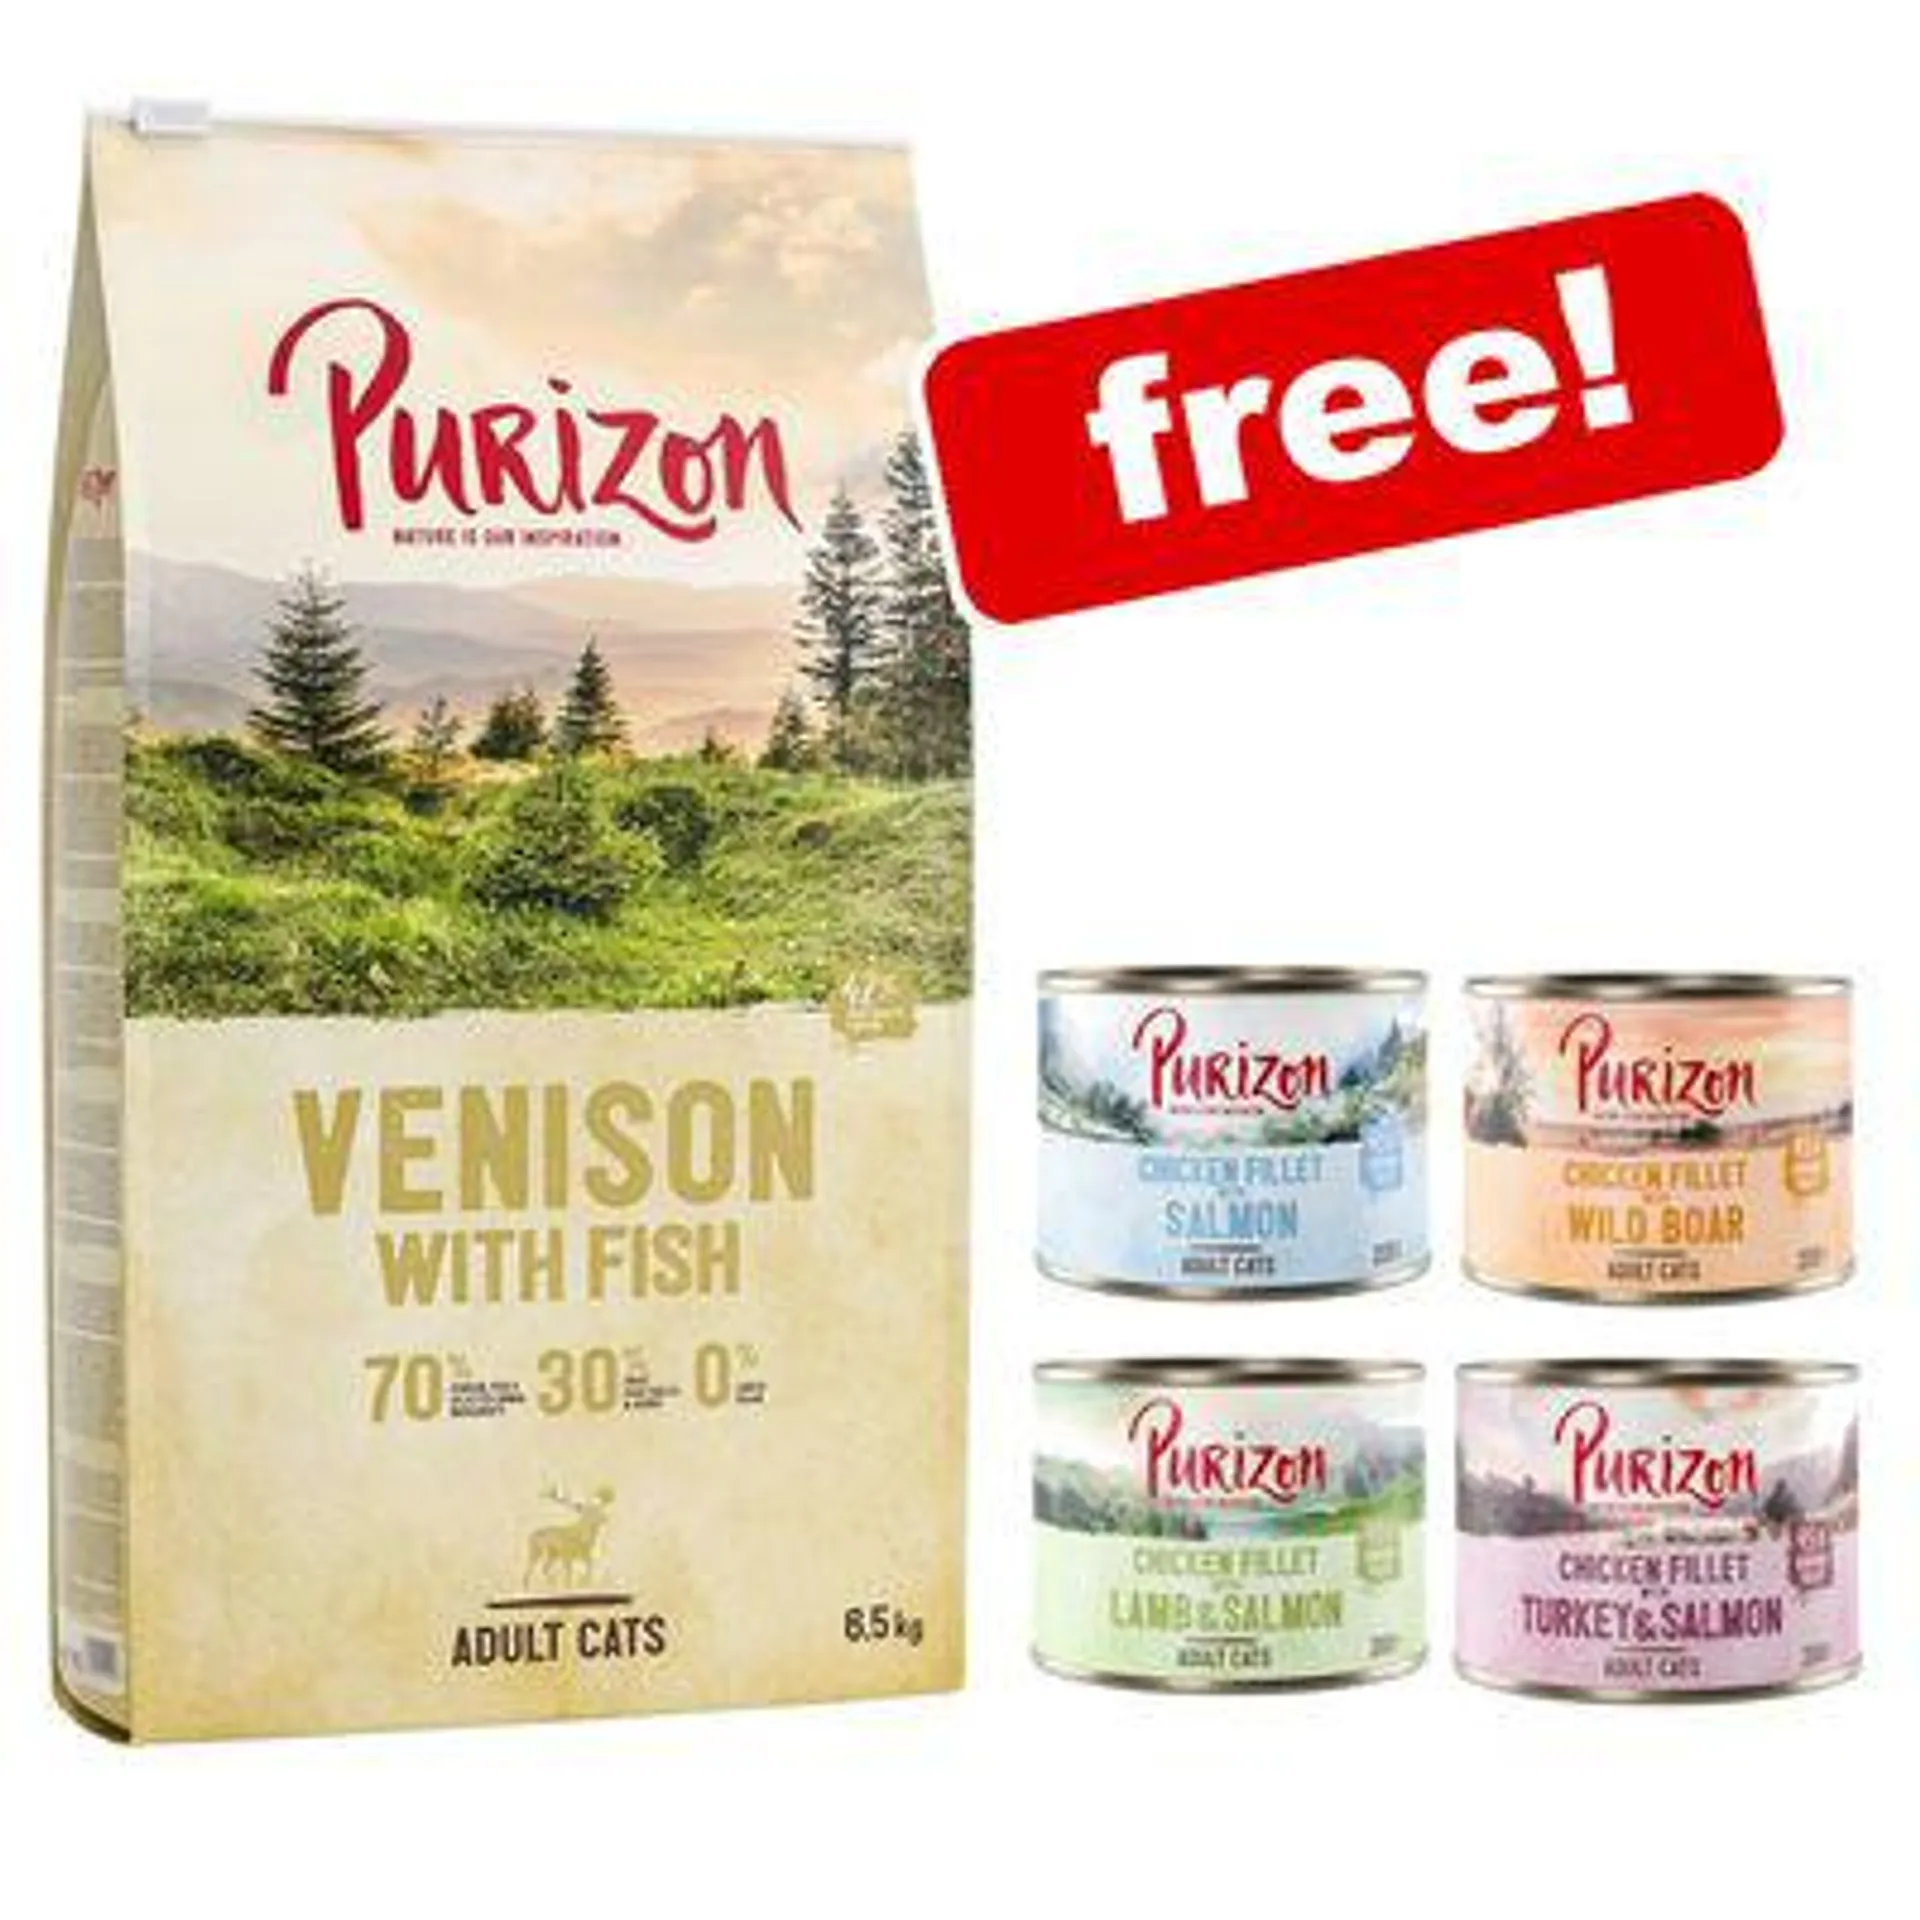 6.5kg Purizon Dry Cat Food + 6 x 200g Wet Cat Food Free!*